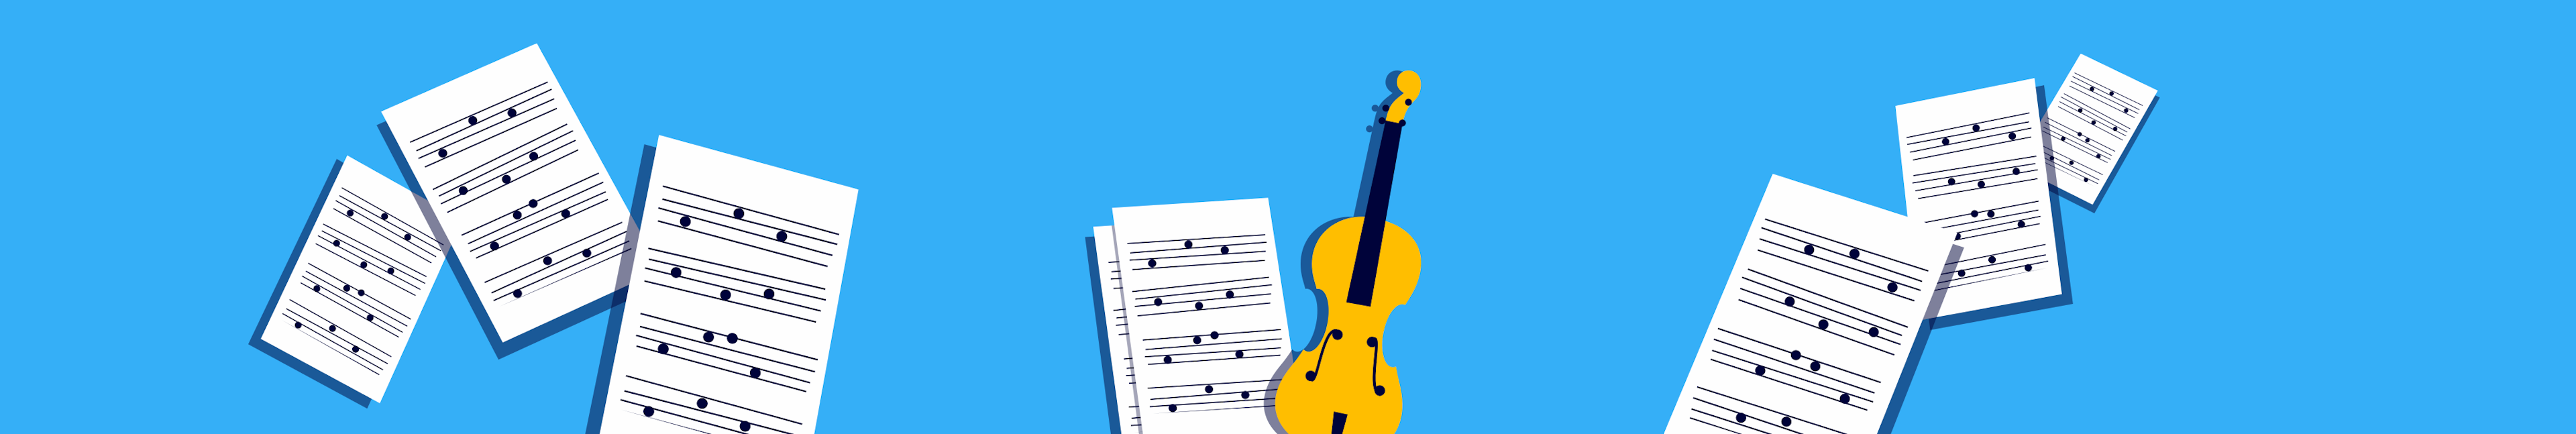 The Cellist's Repertoire